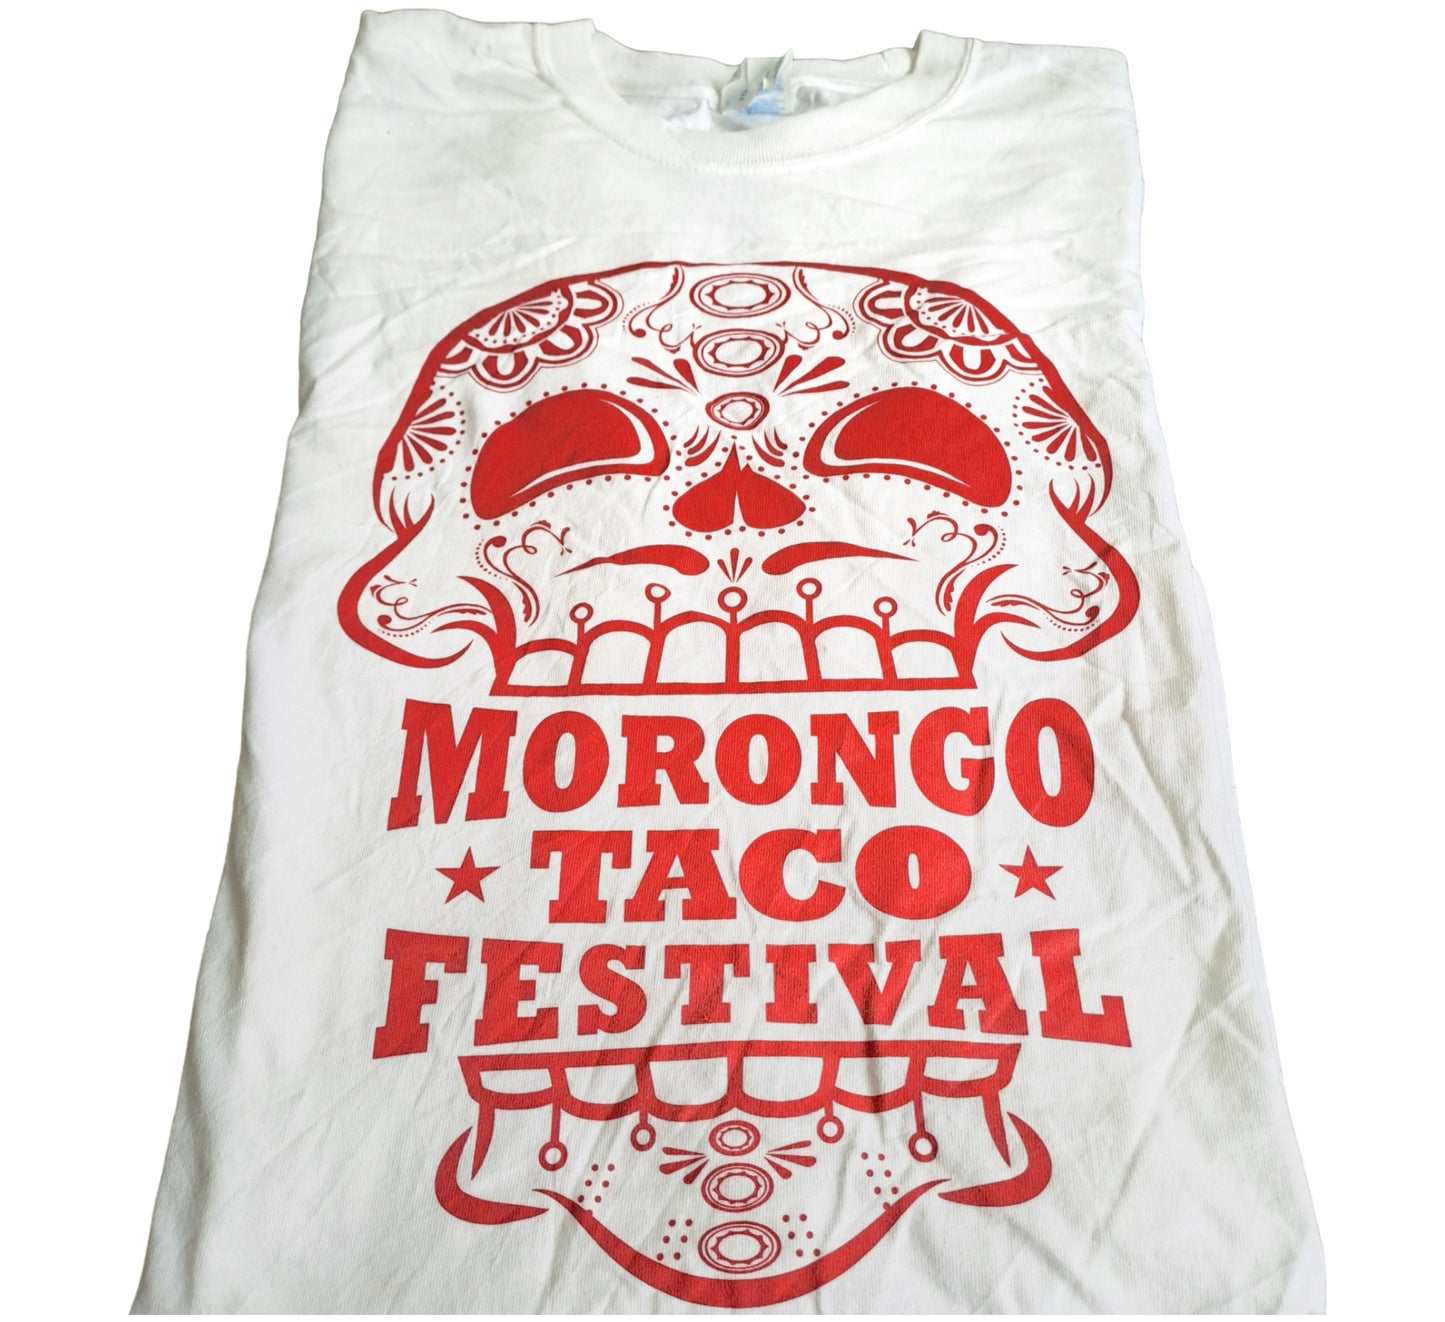 Taco Festival T-shirt